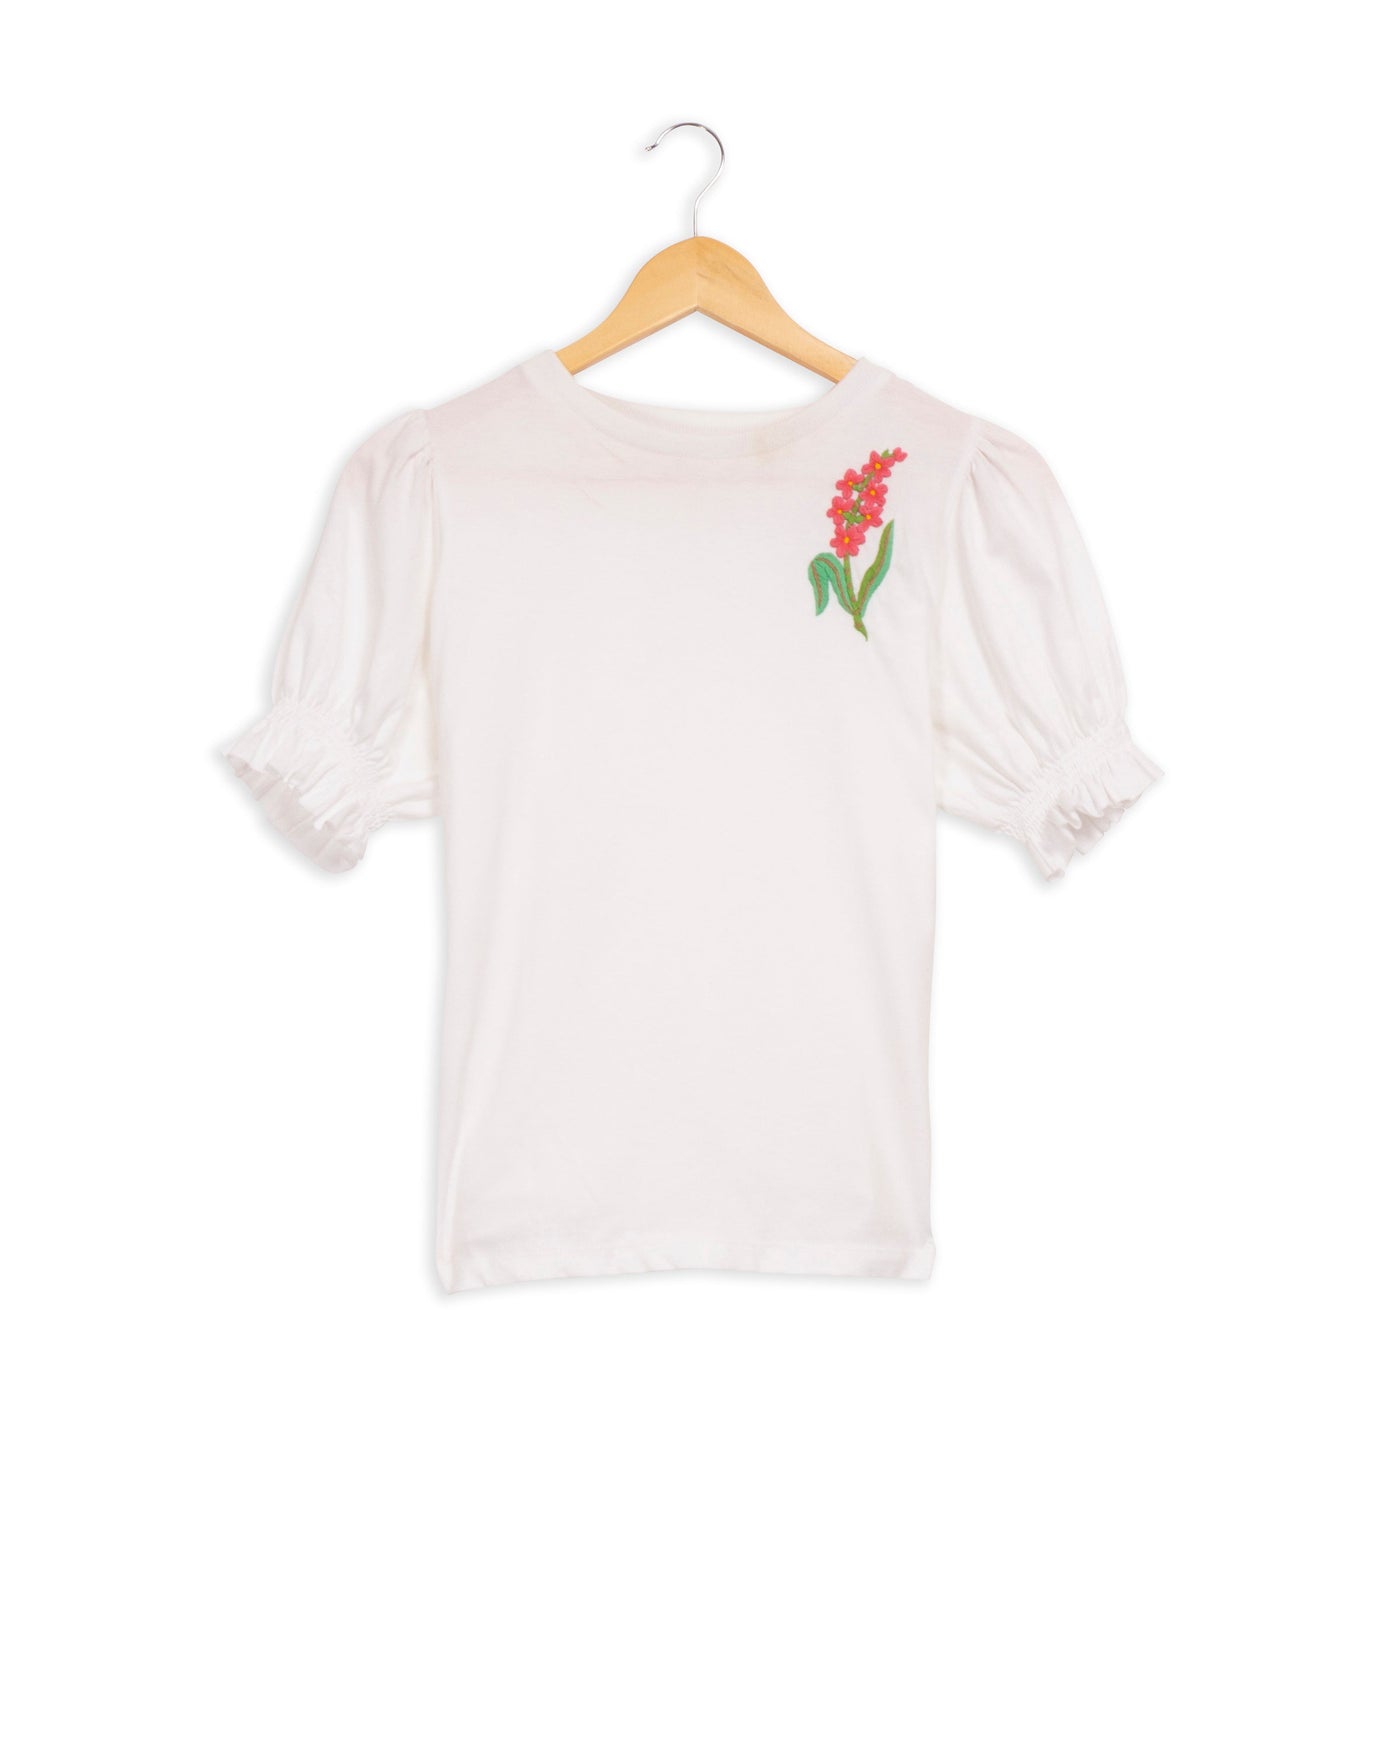 T-shirt Flower blanc - 36